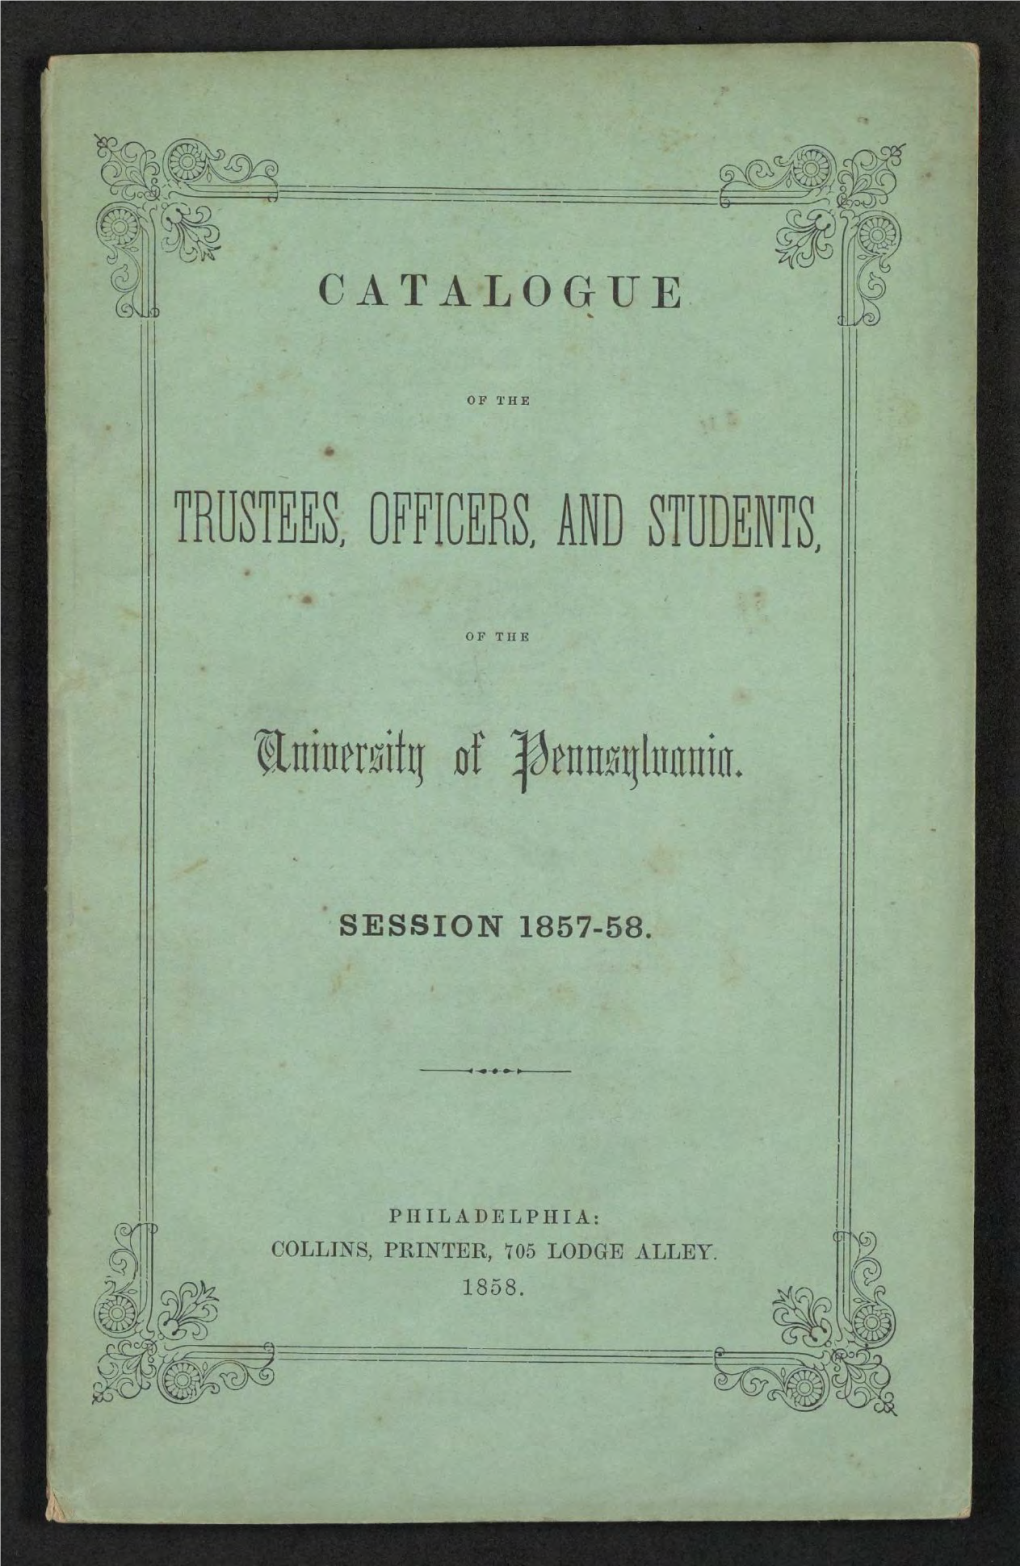 University of Pennsylvania Catalogue, 1857-58